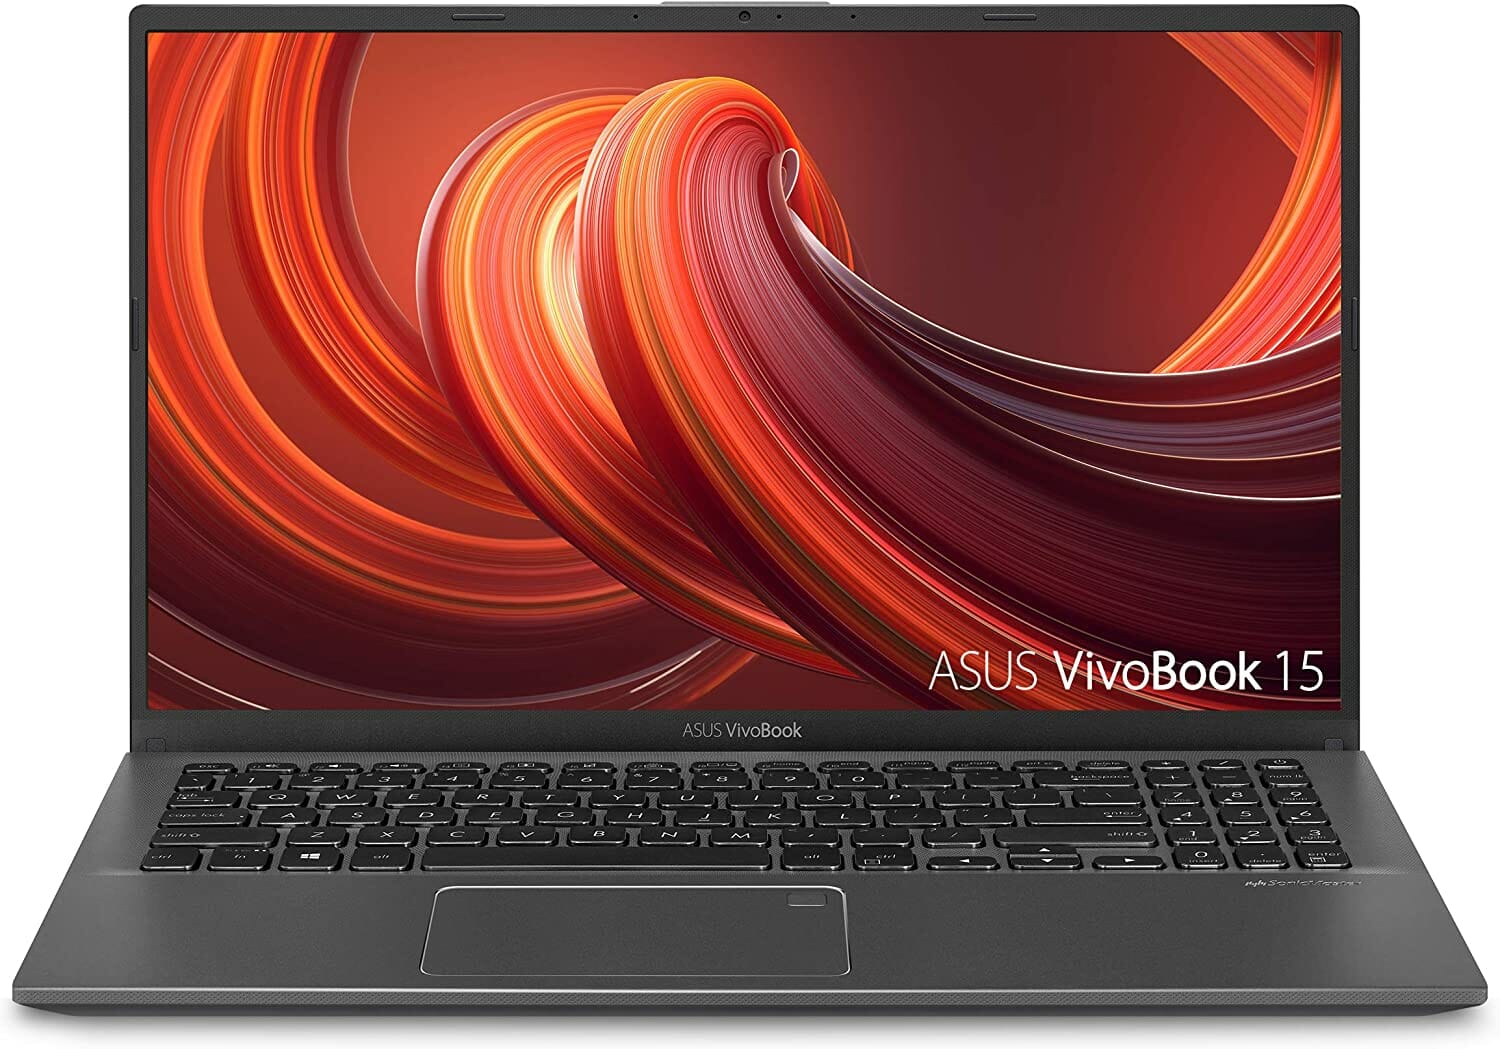  ASUS VivoBook F512 Thin and Lightweight Laptop